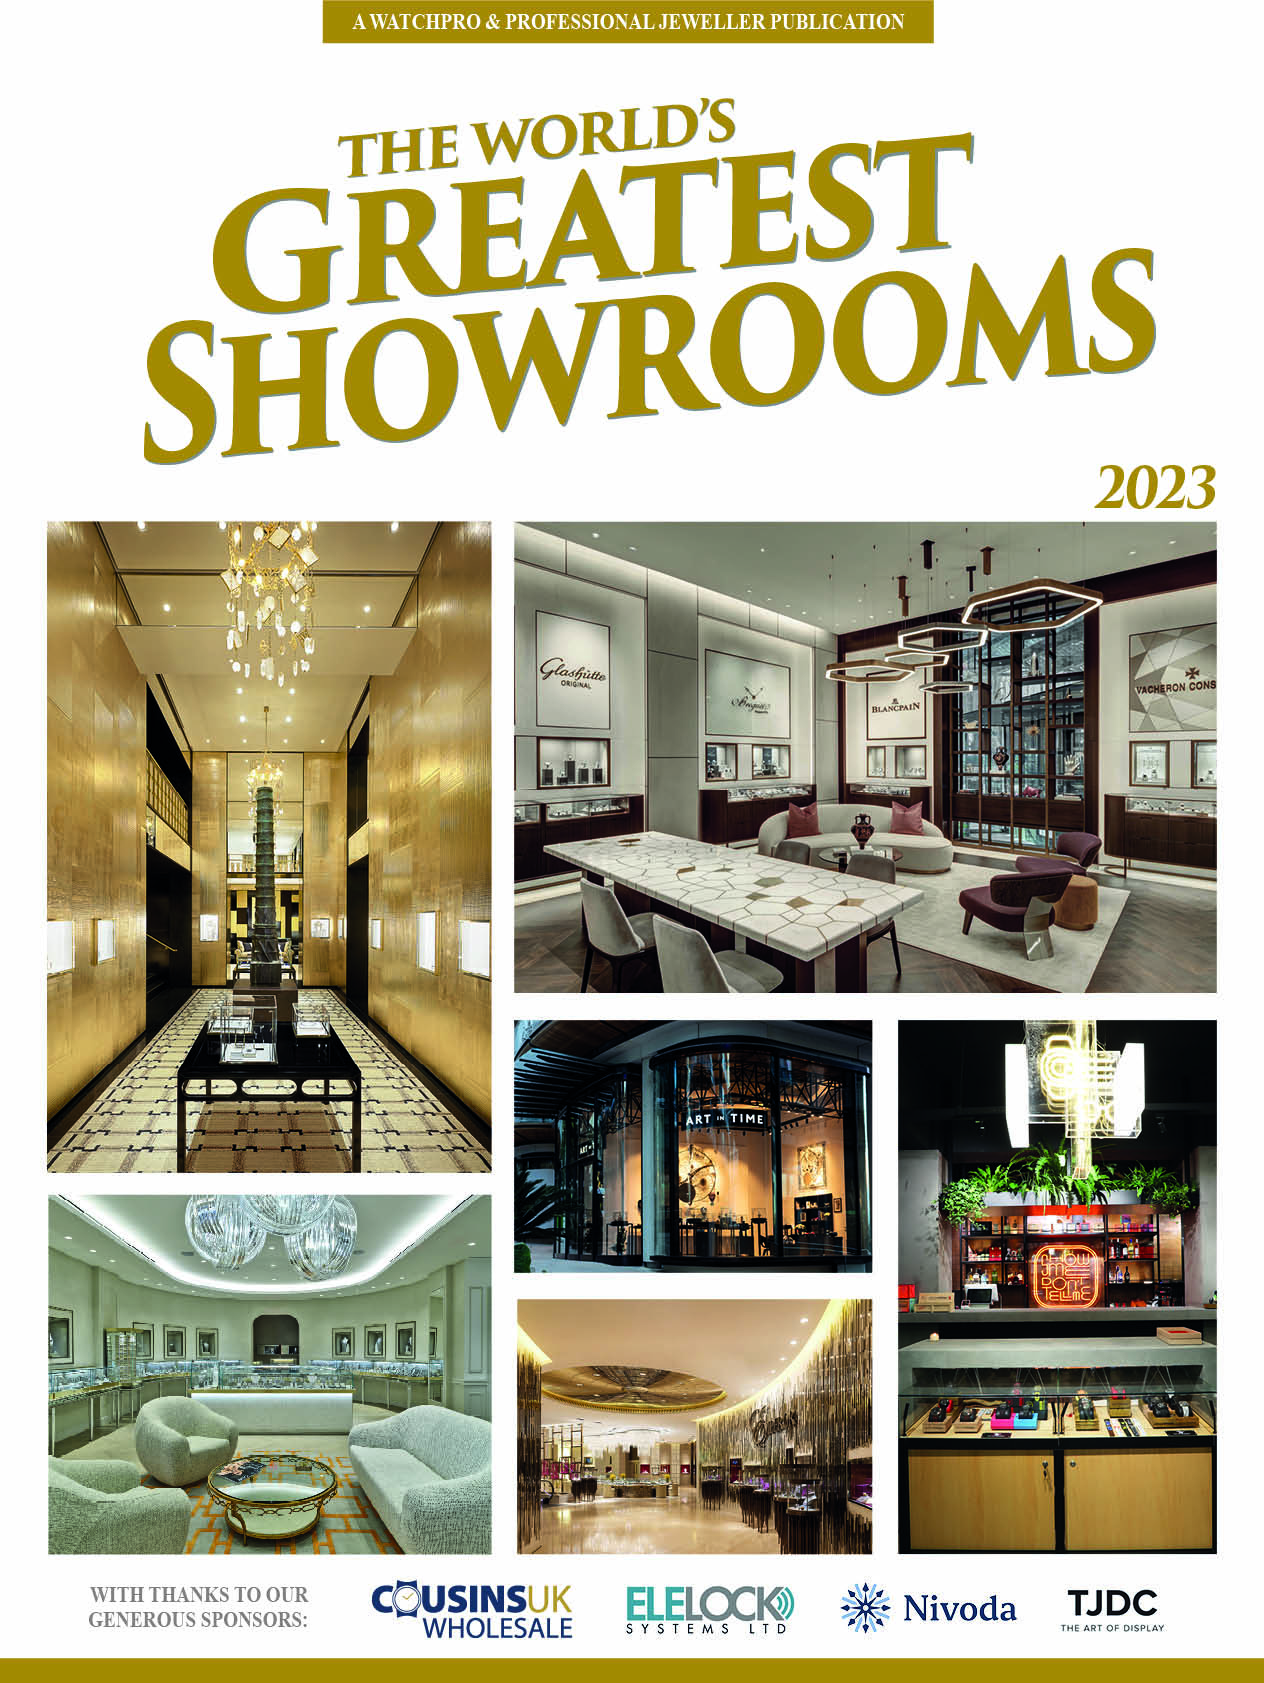 World's greatest showrooms yeijnnfk wp greatest showrooms cover